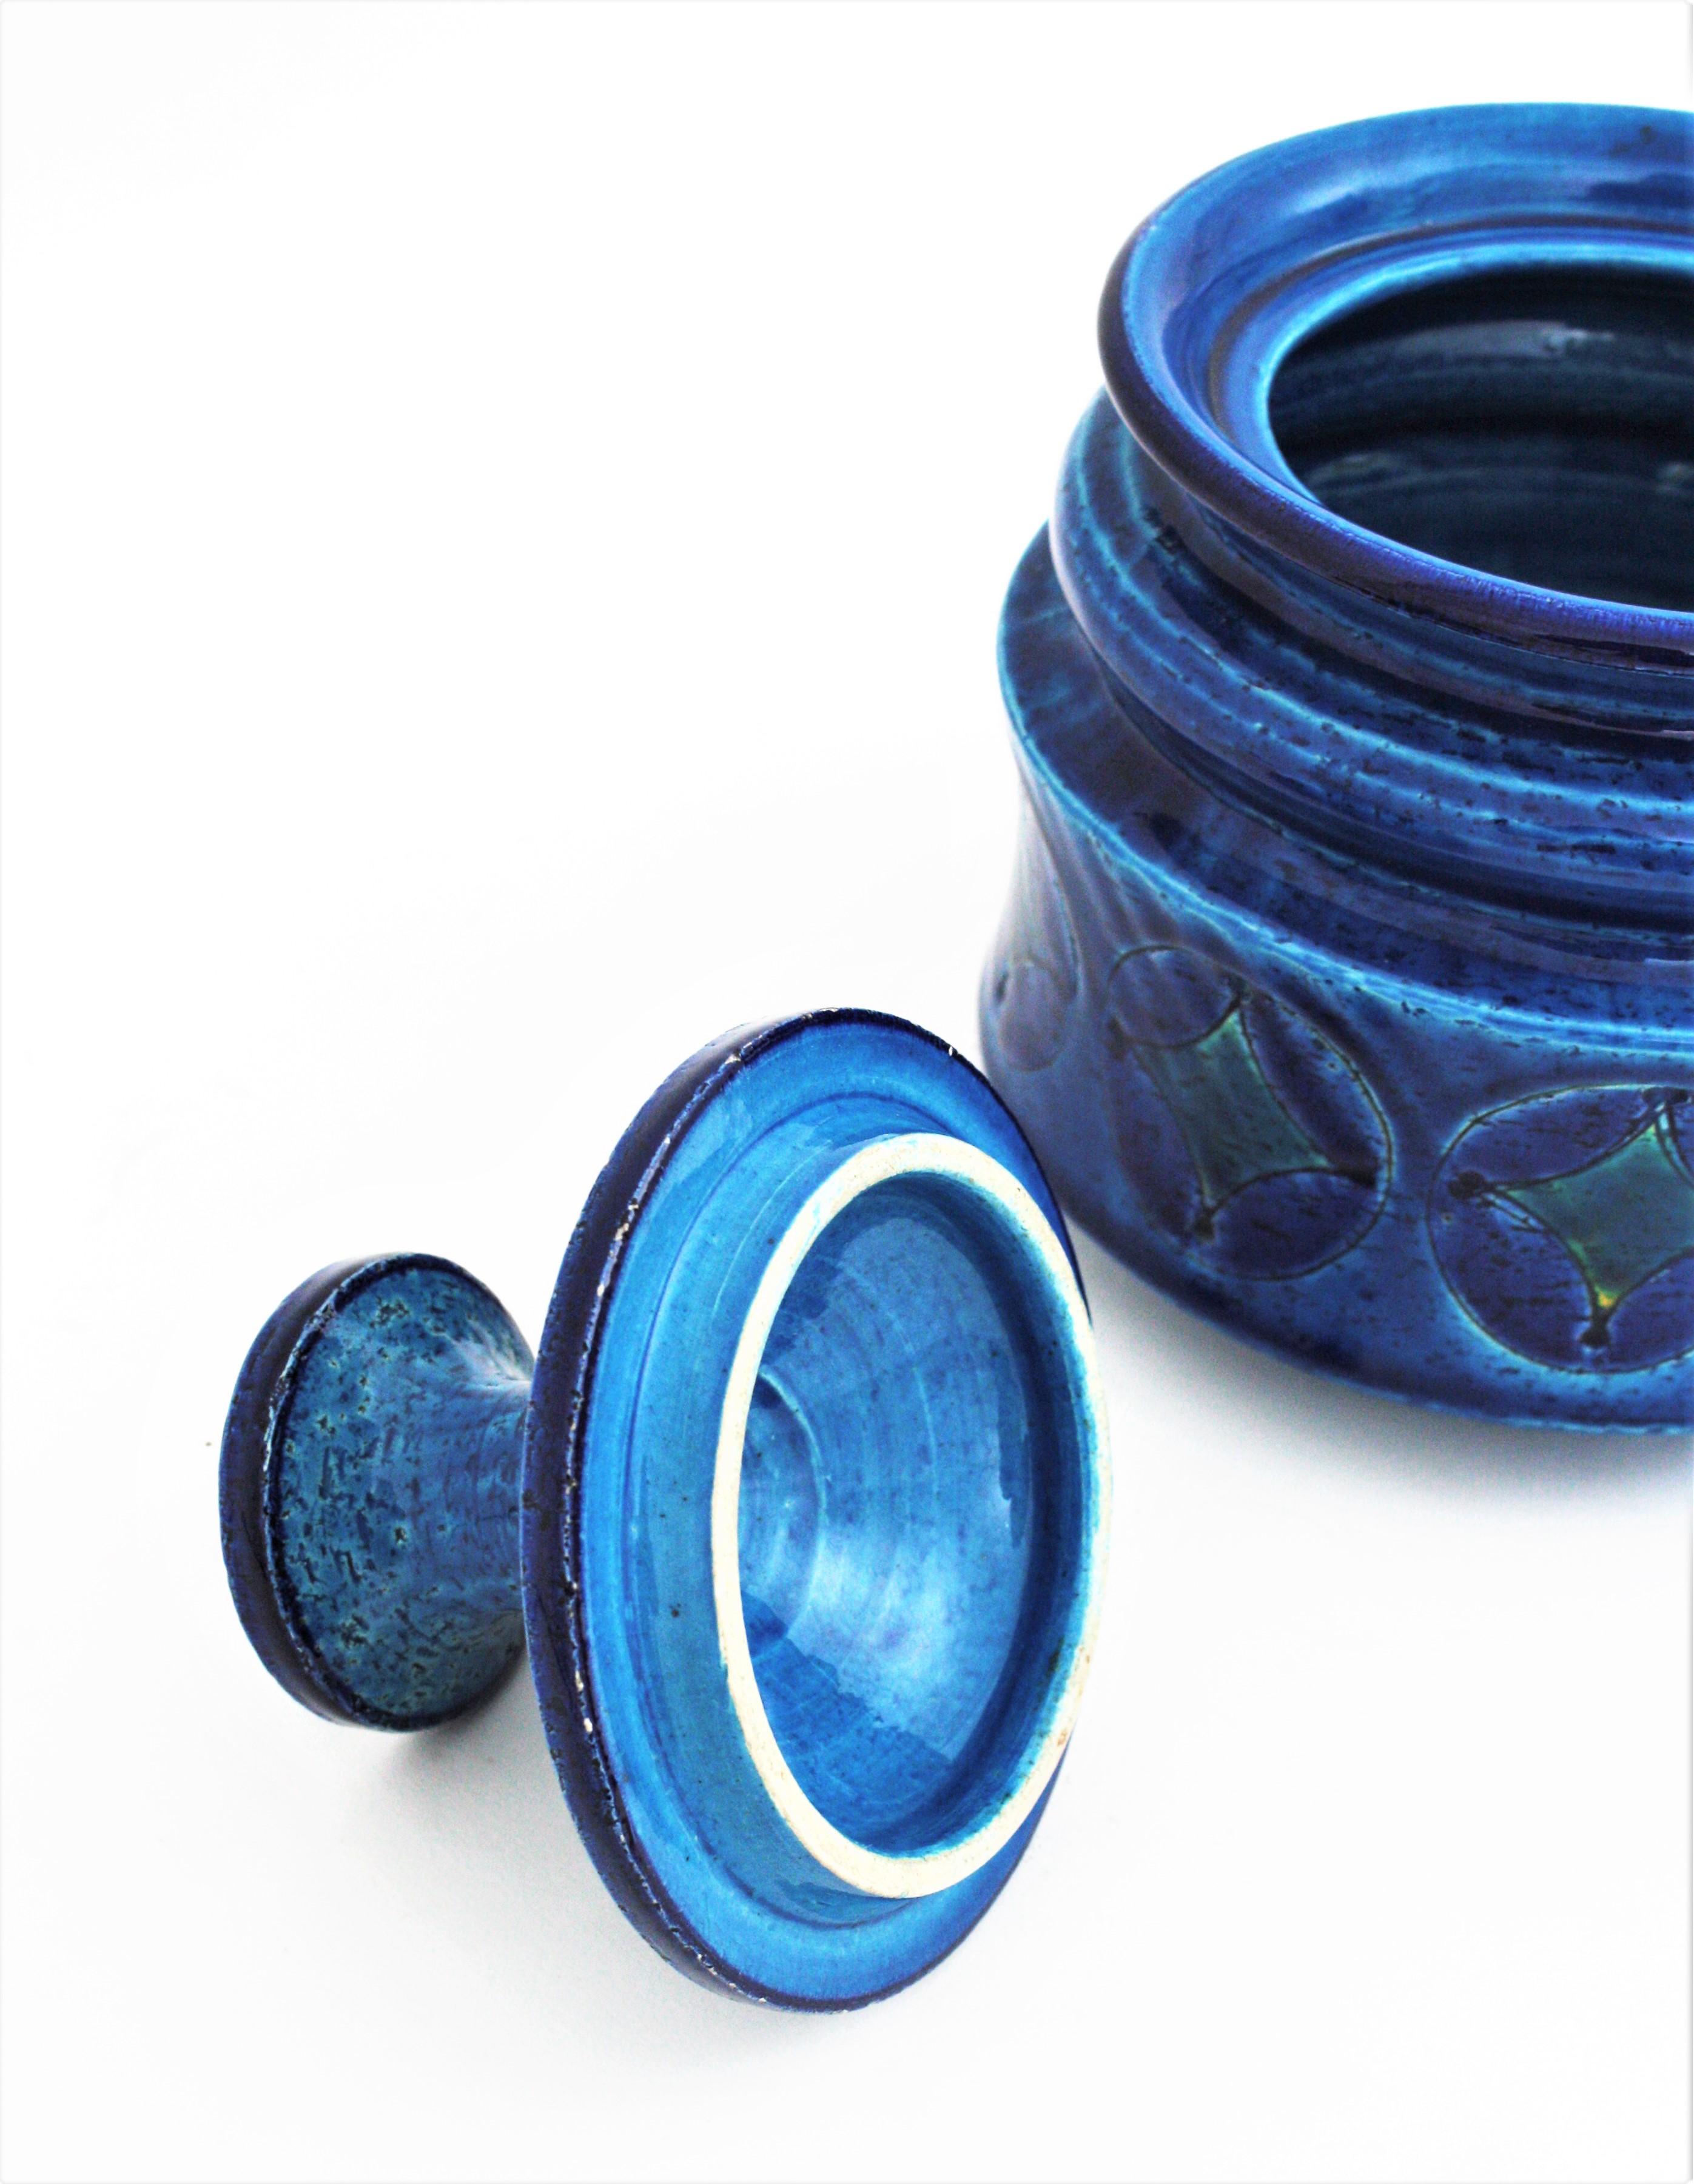 Aldo Londi Bitossi Blue Ceramic Lidded Box / Pot Circles and Rhombus Motif 1